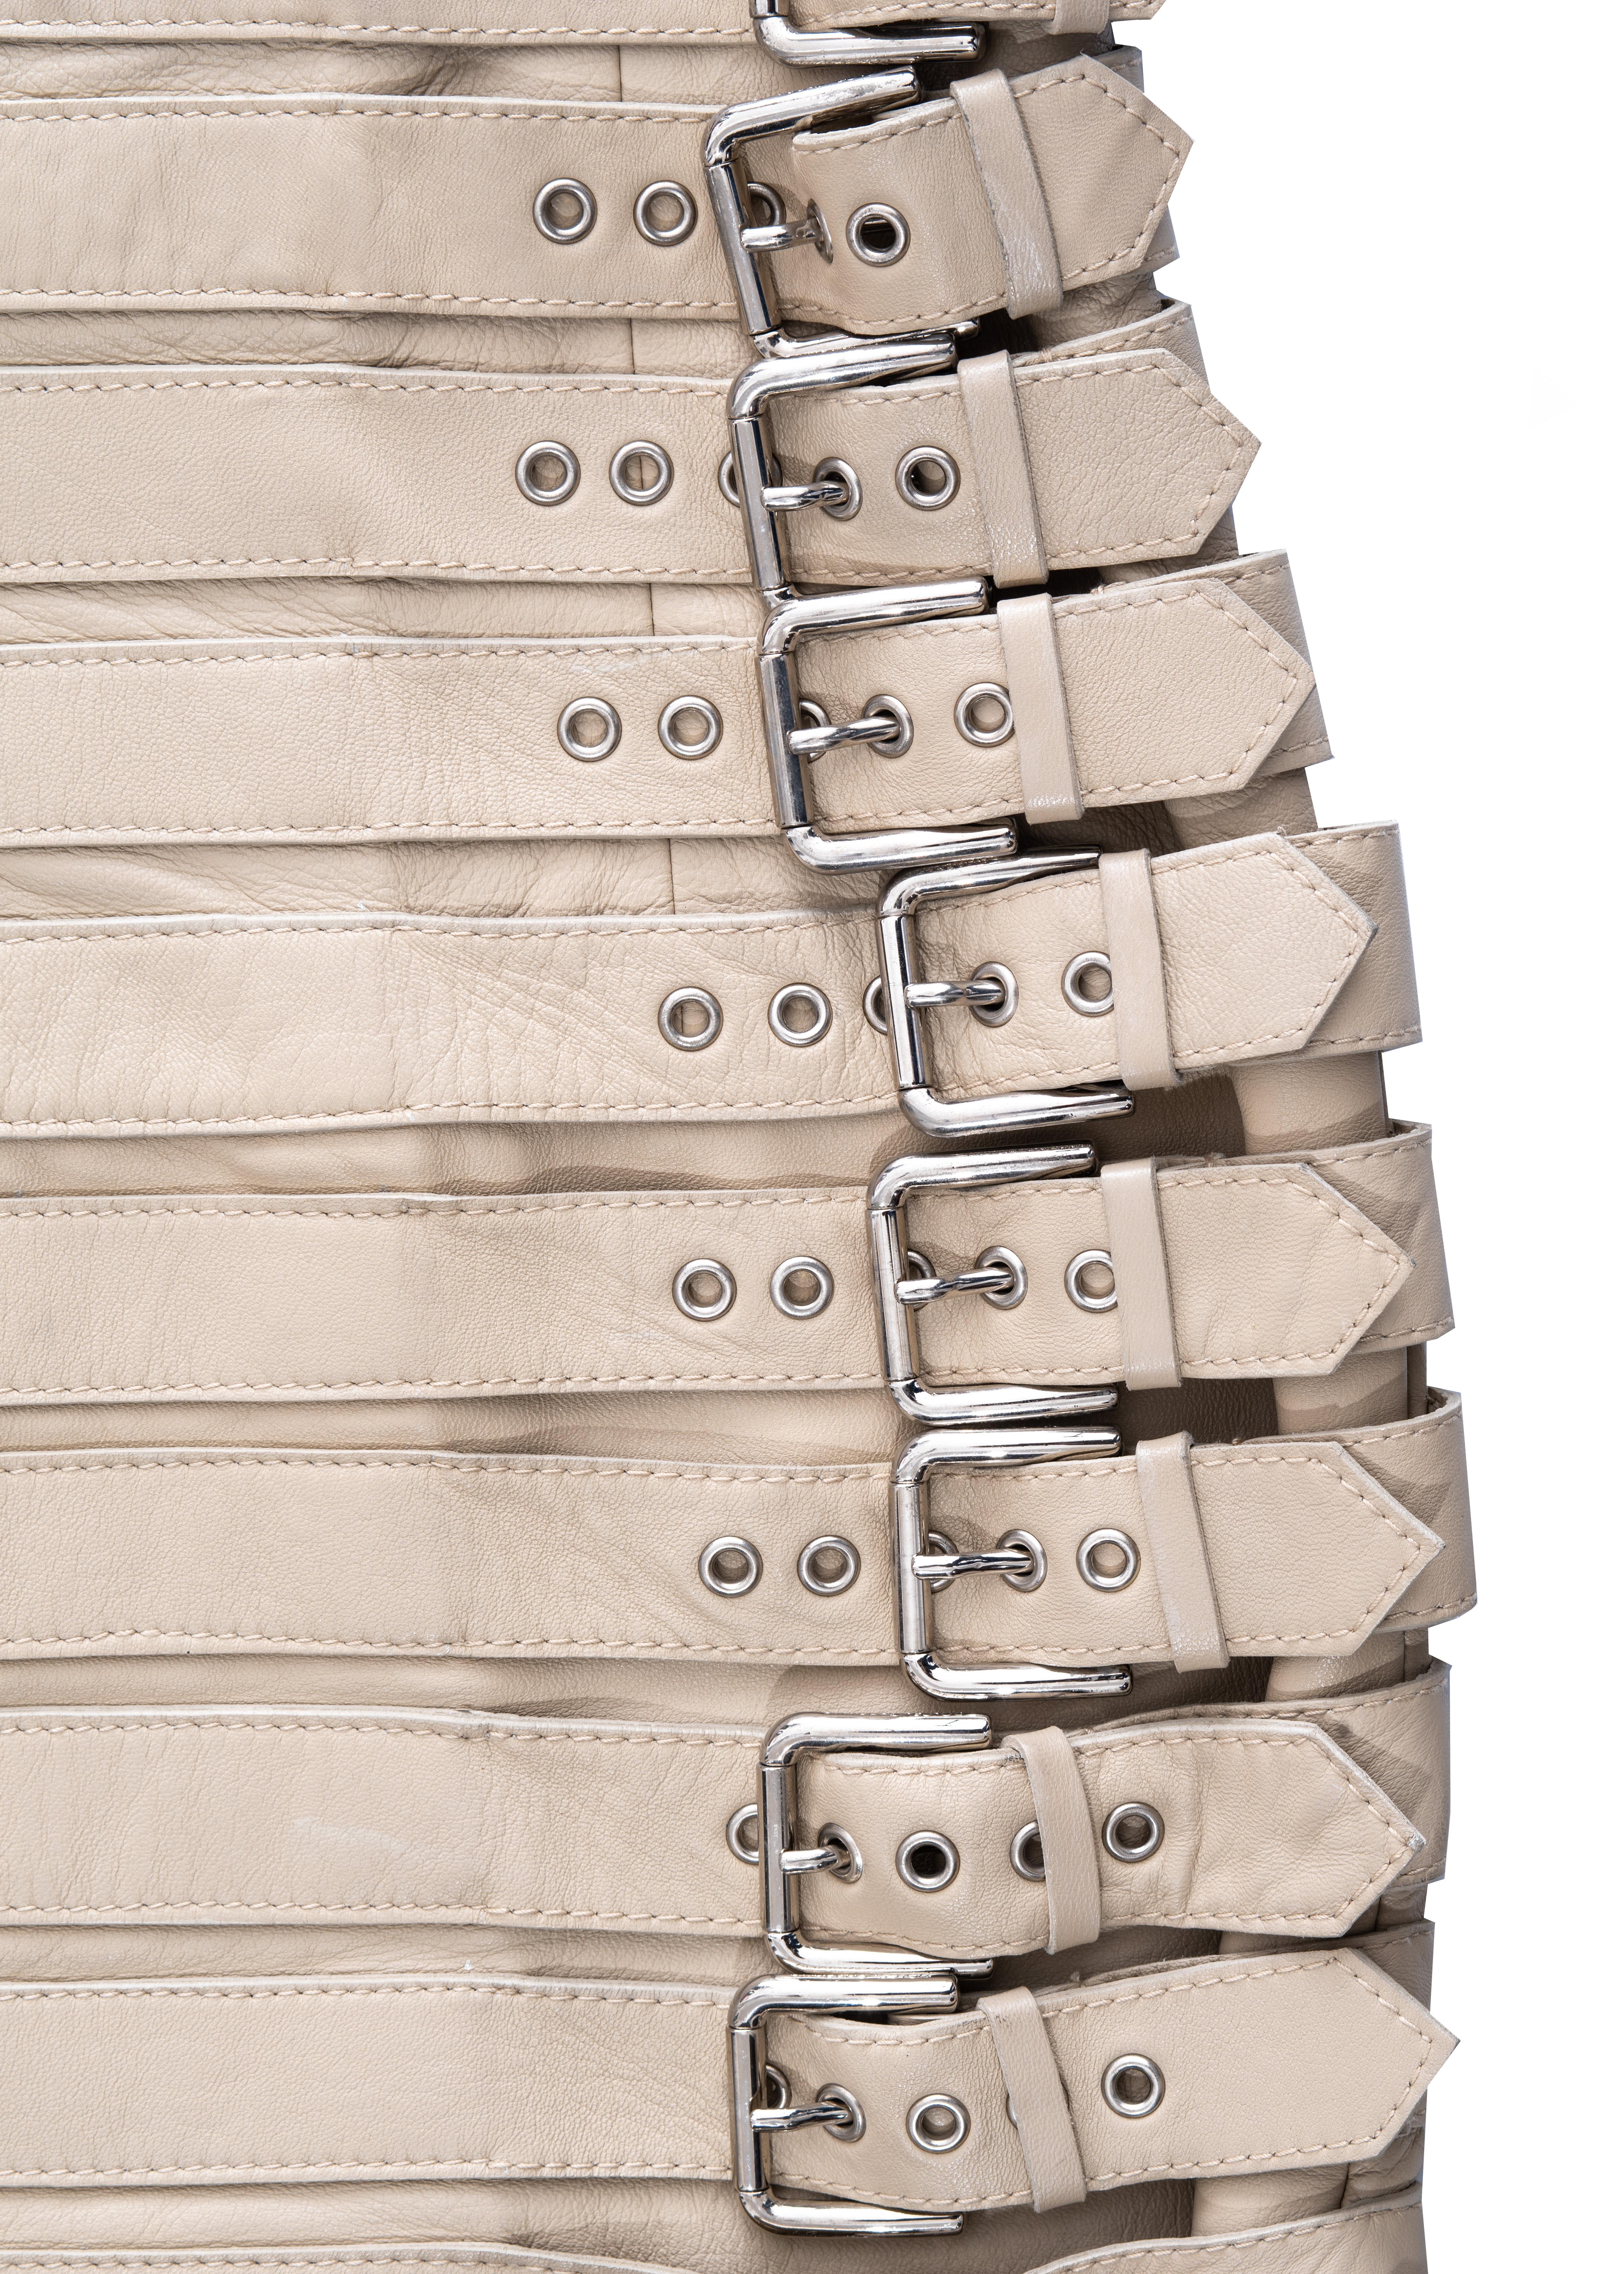 ▪ Dolce & Gabbana cream leather mini skirt 
▪ 100% Lambskin leather 
▪ Ten metal buckle fastenings 
▪ IT 40 - FR 36 - UK 8 - US 4
▪ Spring-Summer 2003